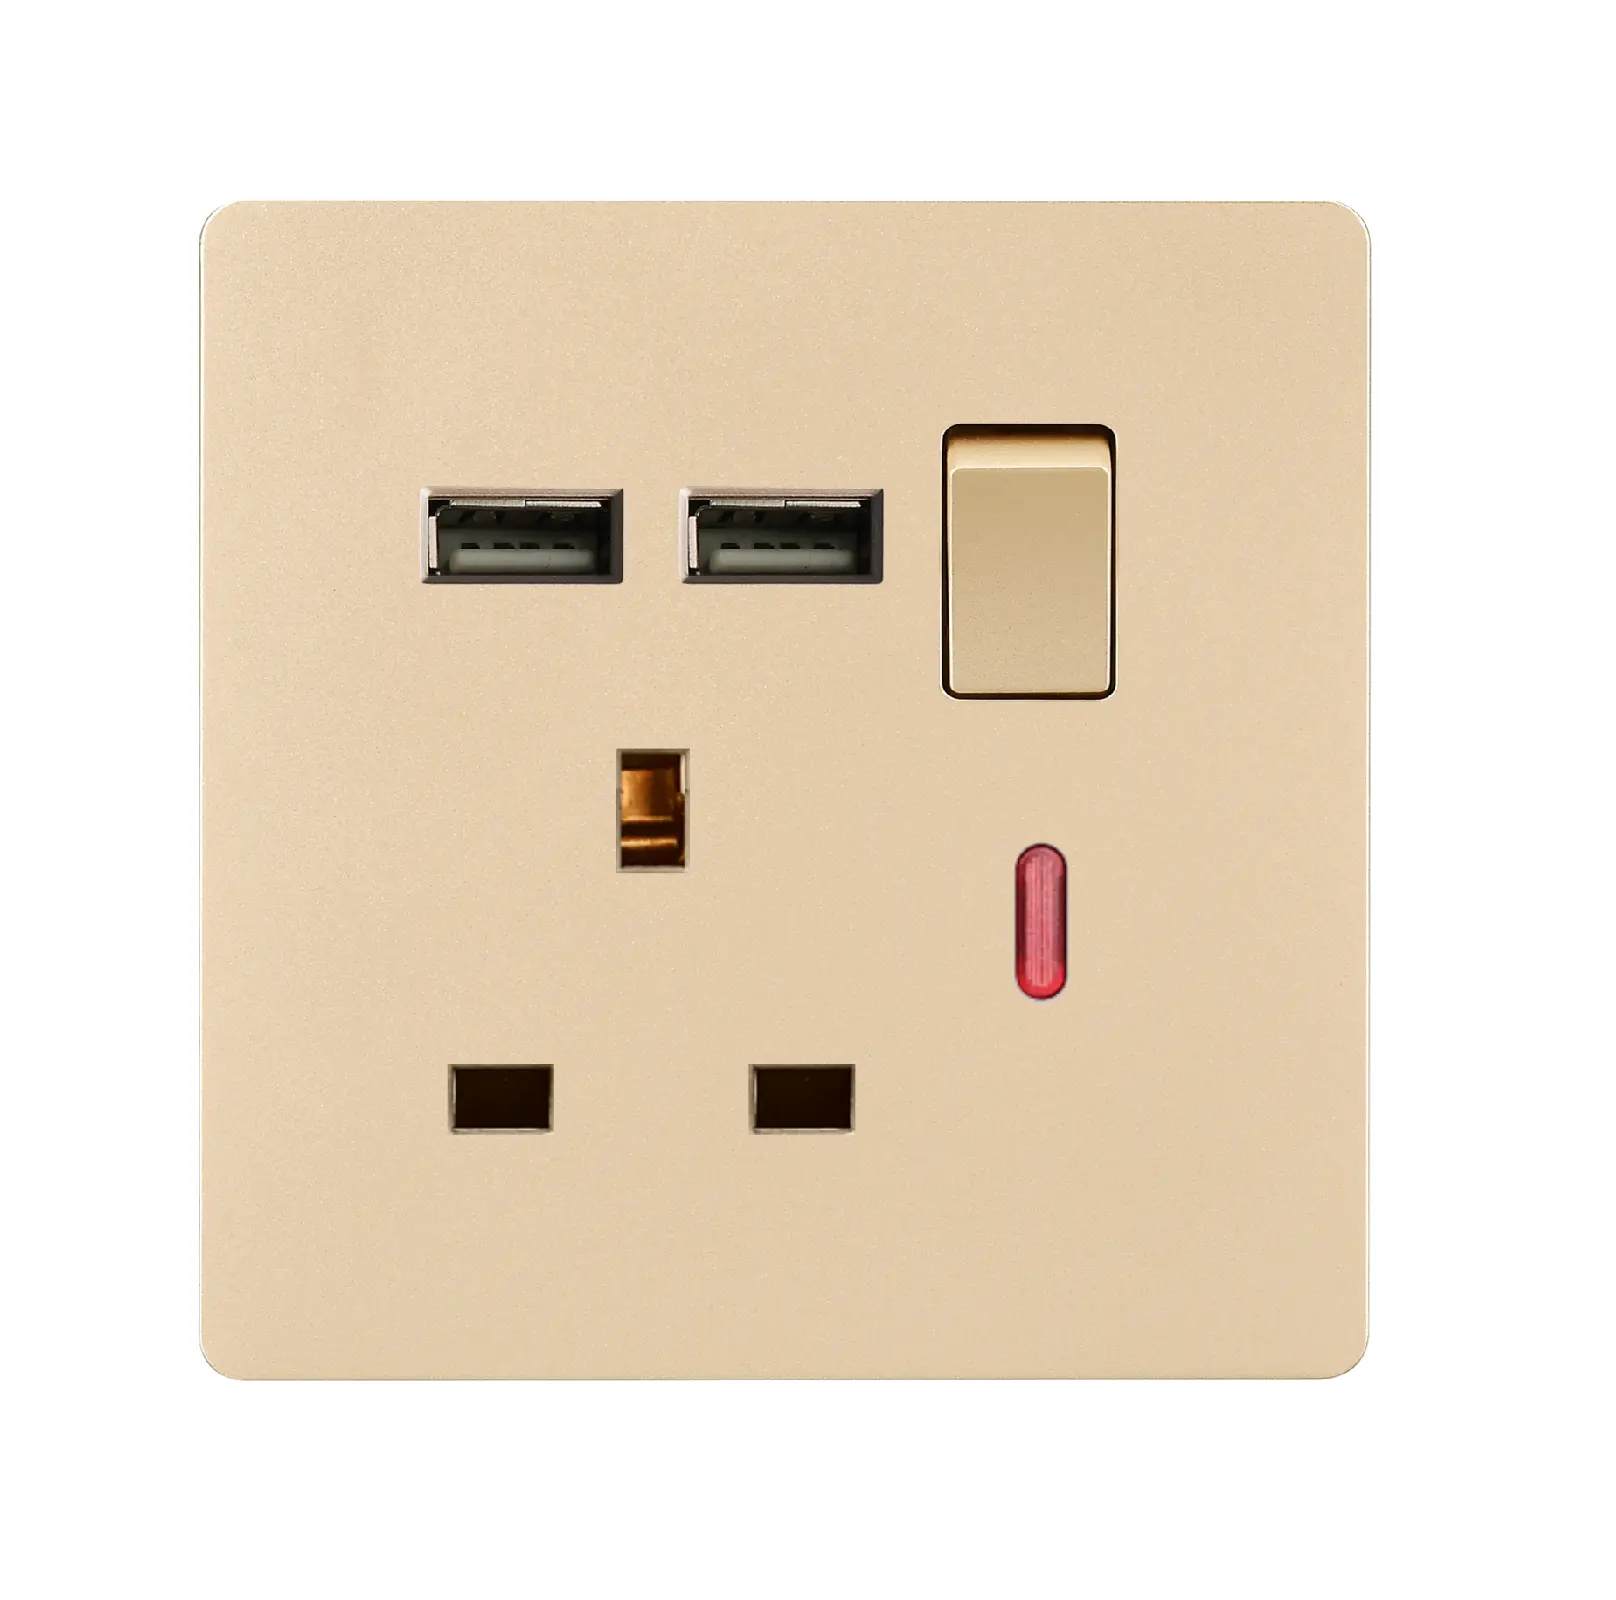 CGZ home wall light switch EU UK standard 1/2/3 Gang electrical wall switch socket